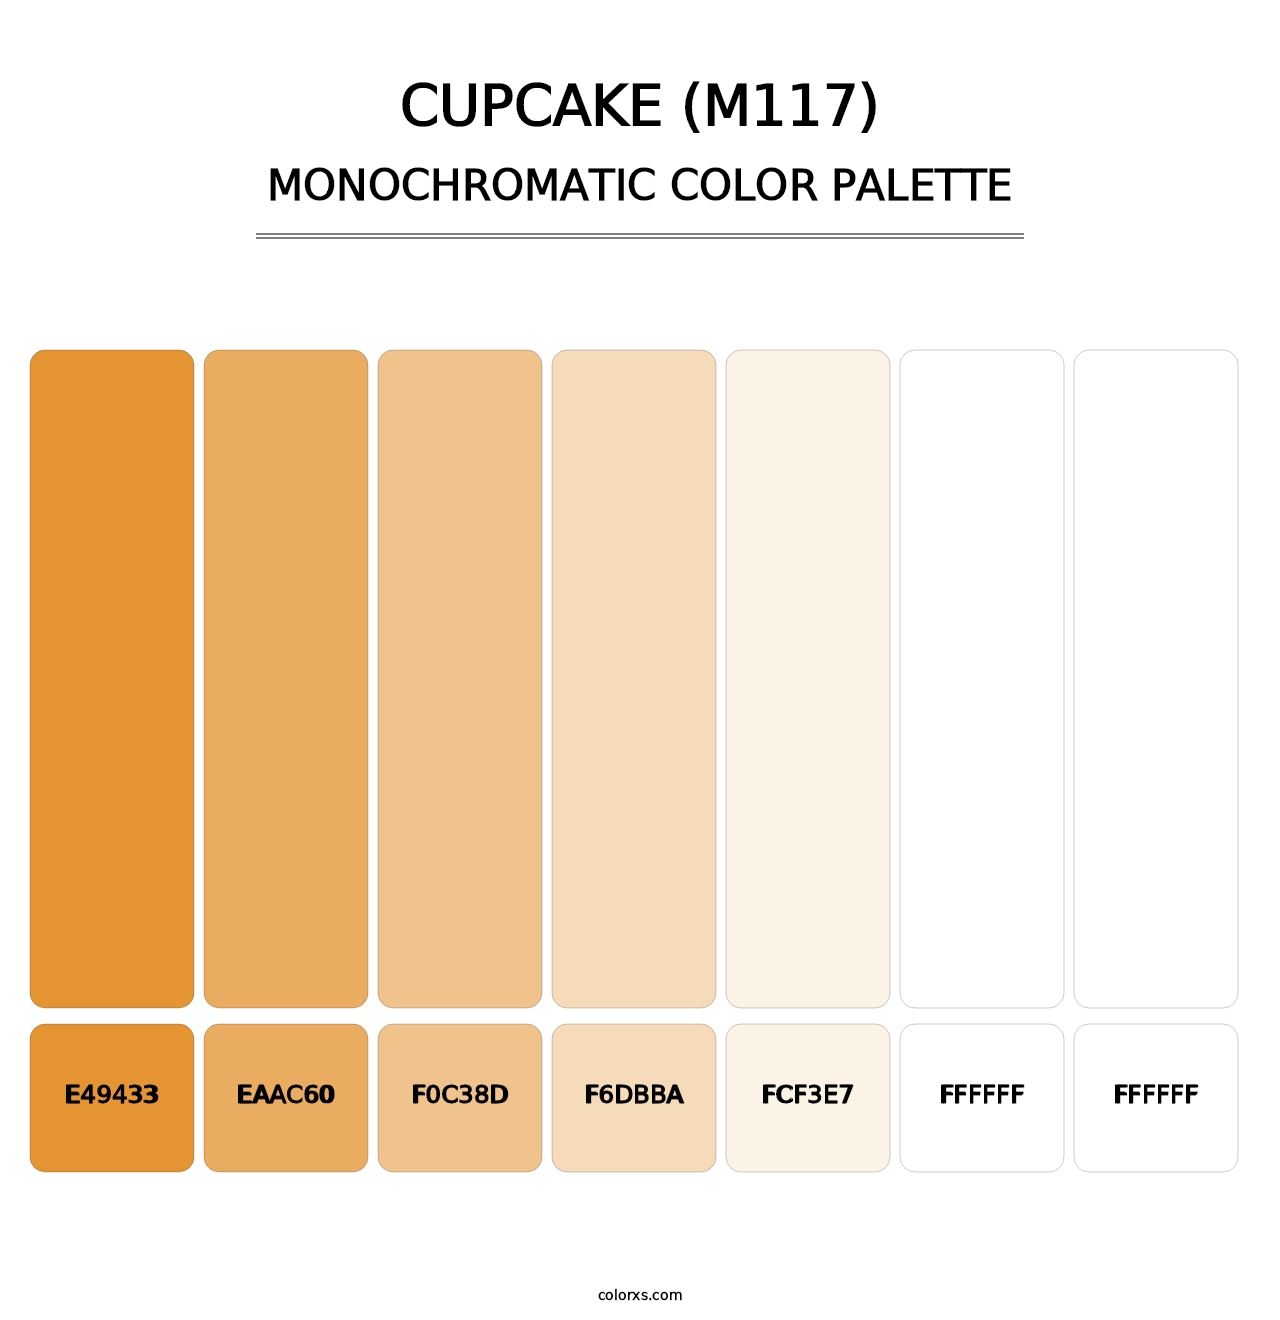 Cupcake (M117) - Monochromatic Color Palette